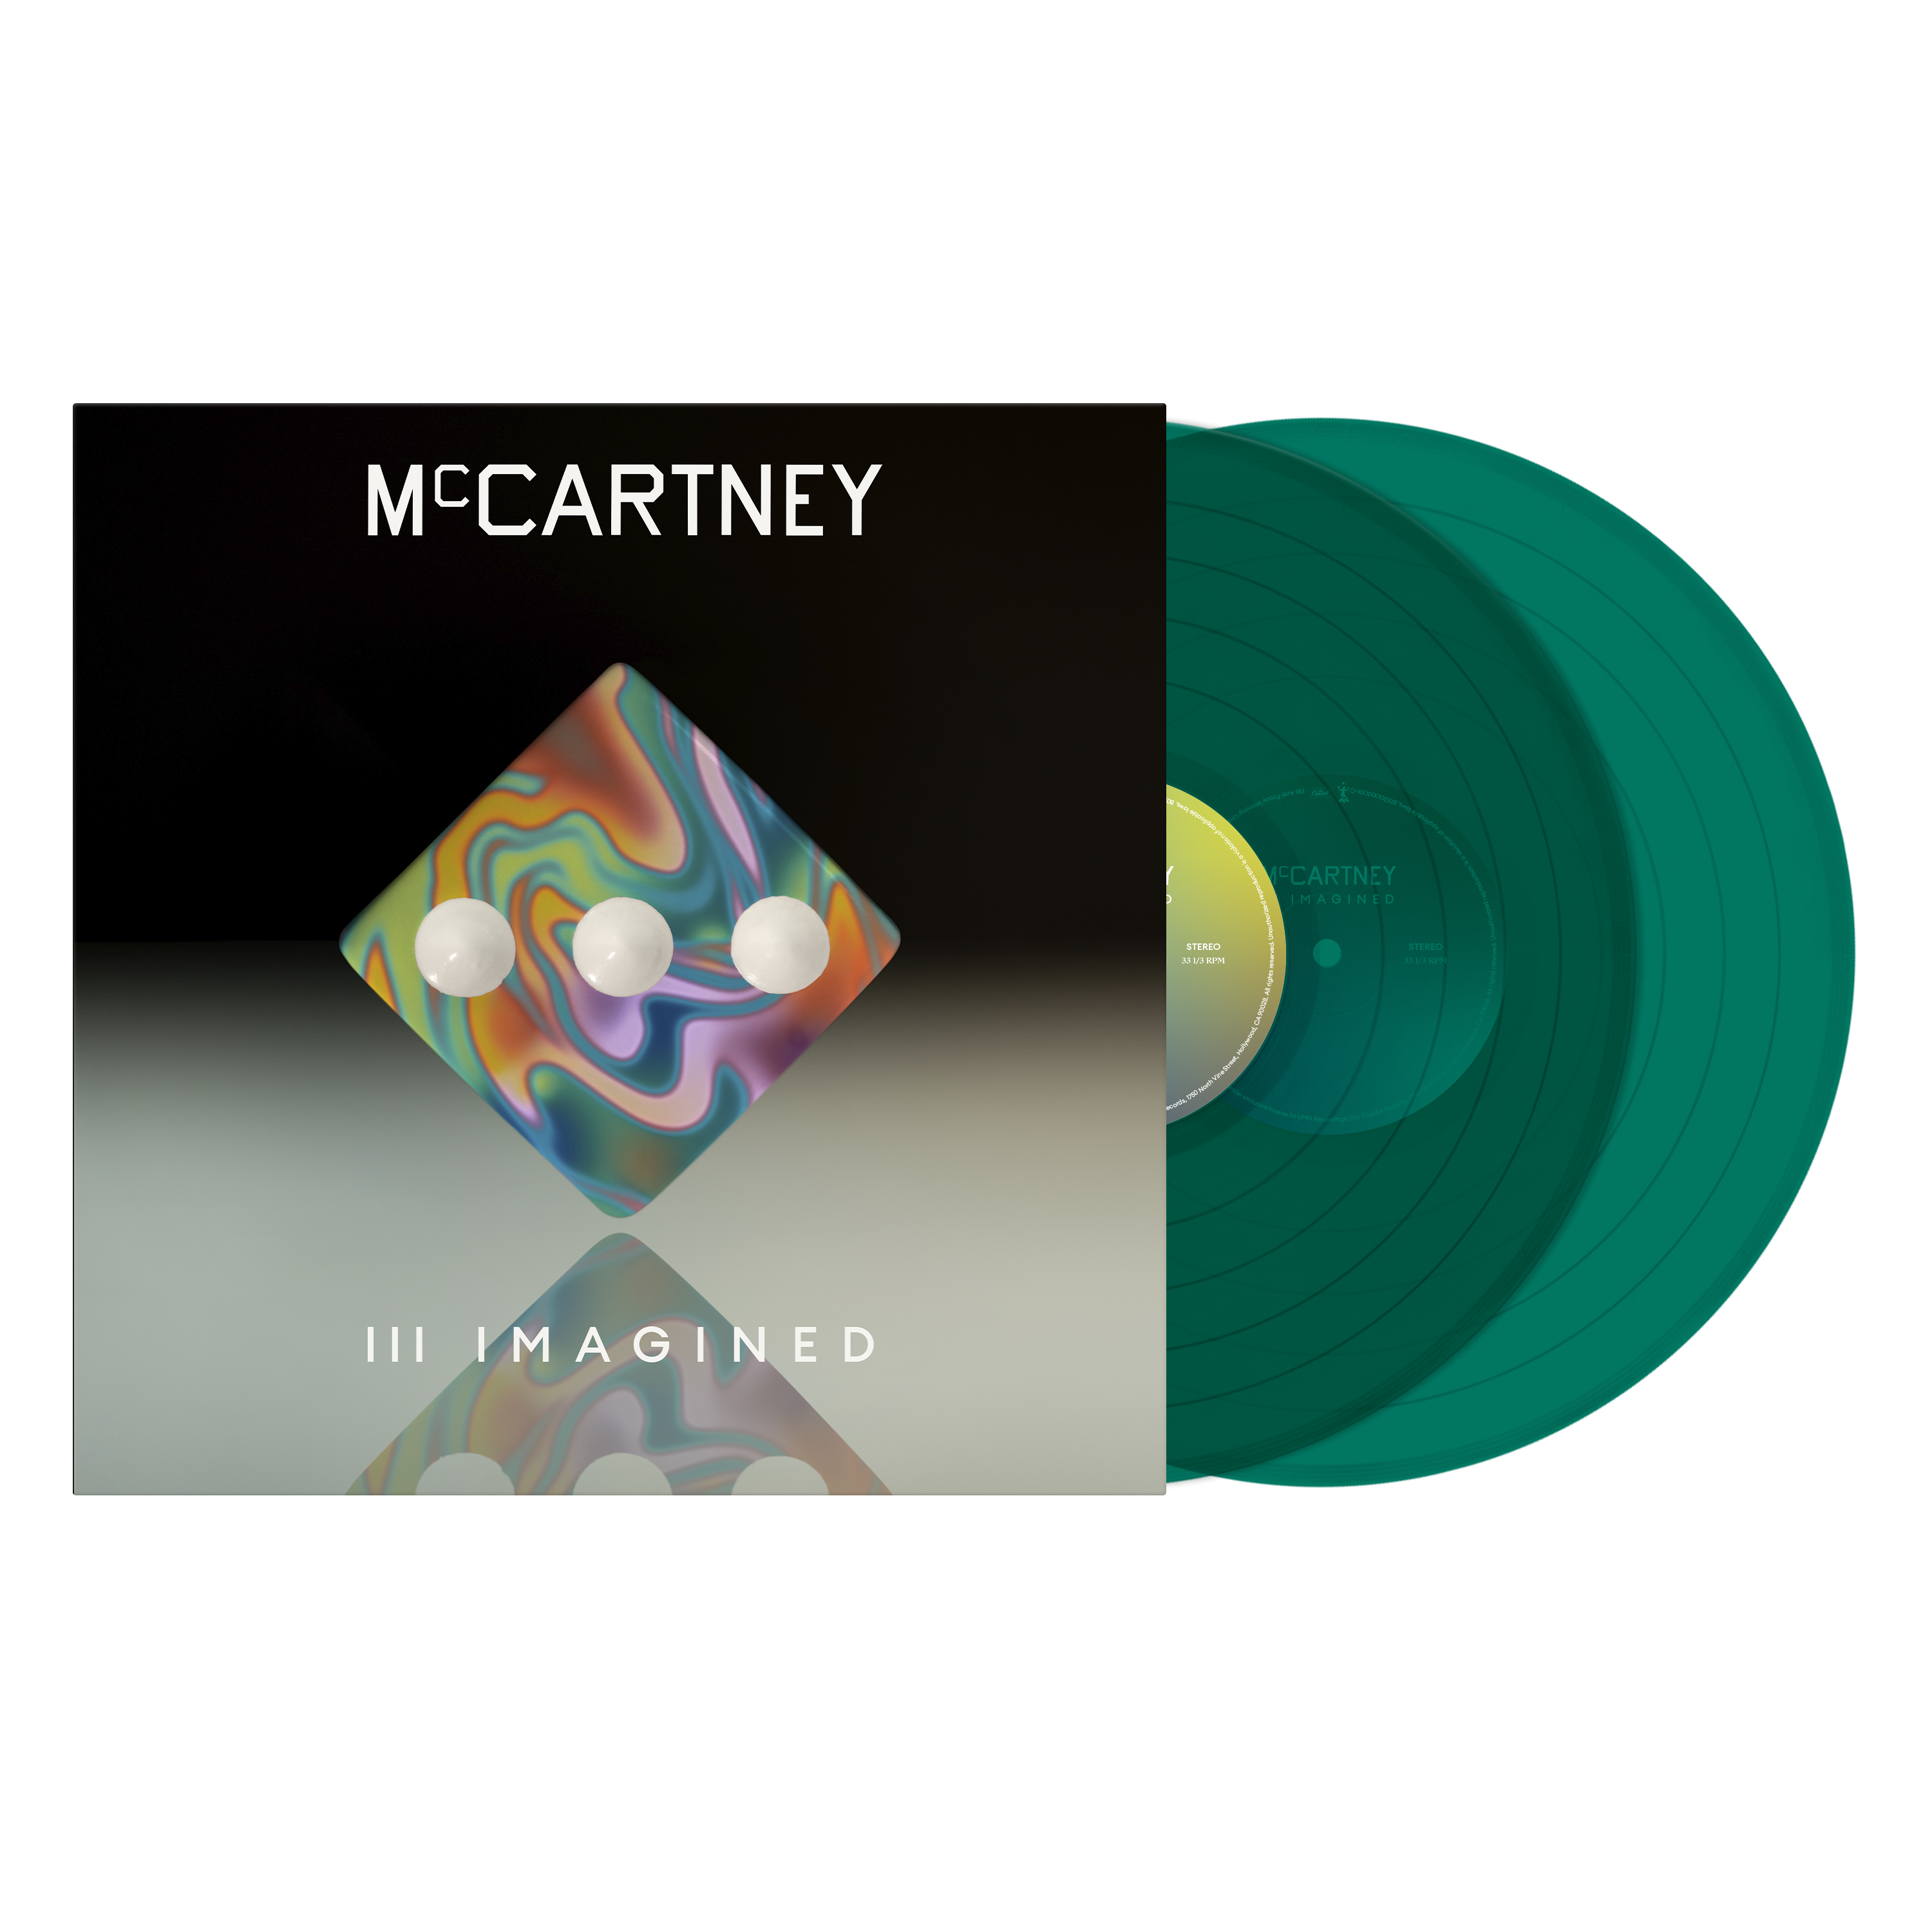 Paul McCartney, Wings - McCartney III Imagined - Limited Edition Exclusive Transparent Dark Green 2LP